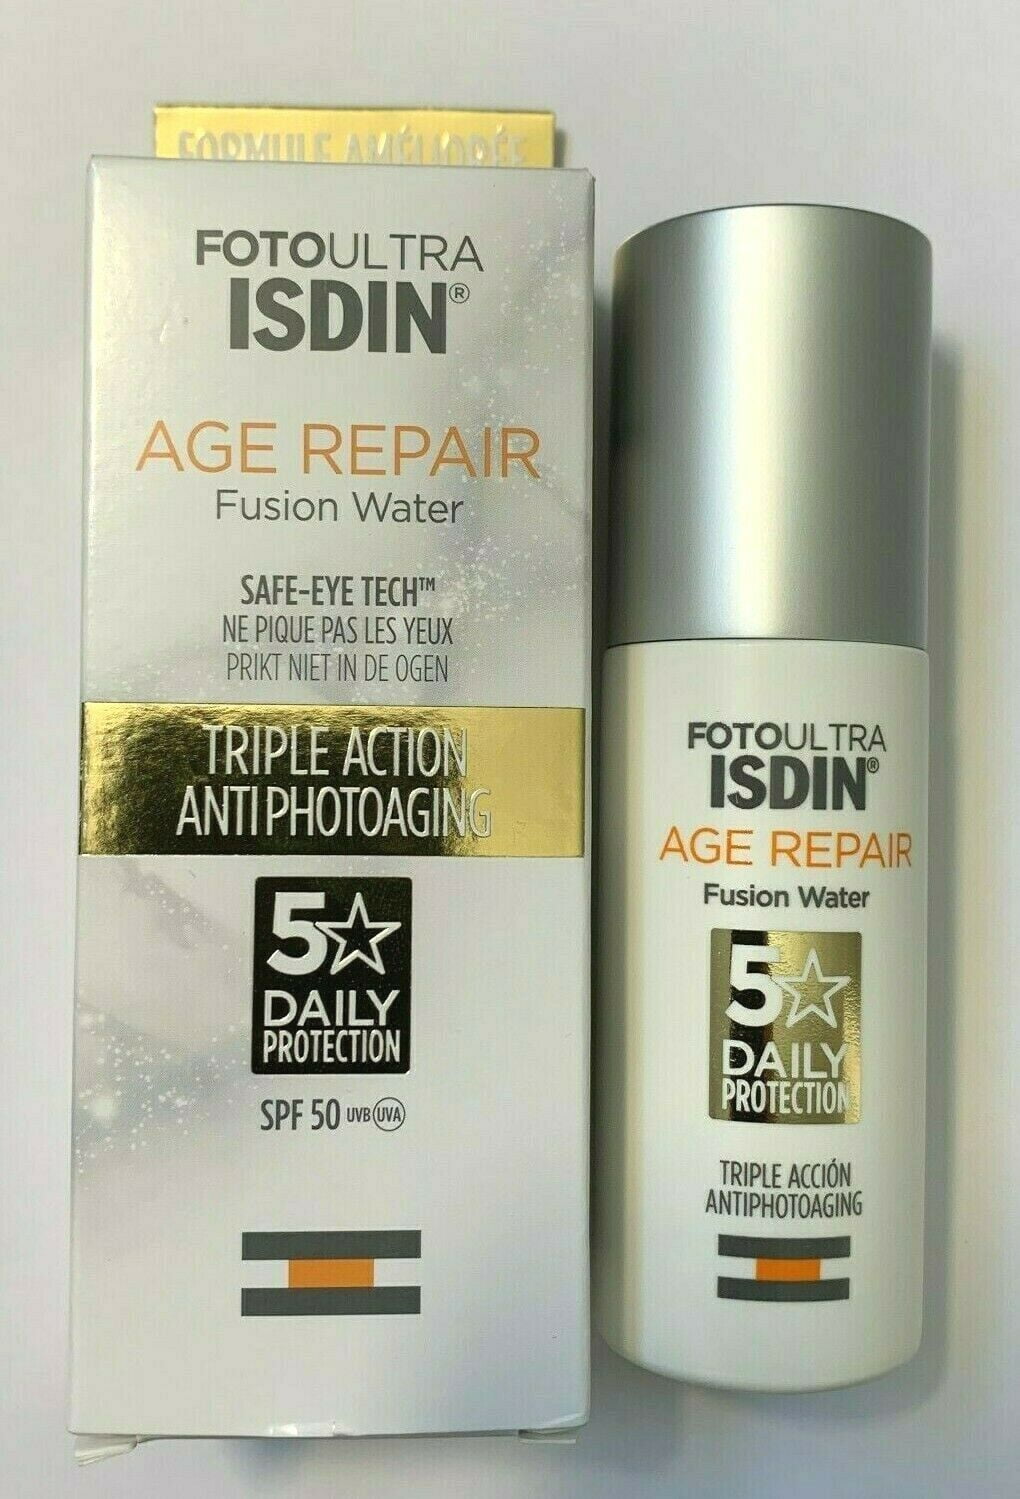 ISDIN FOTOULTRA age Repair Color. Купить ISDIN солнцезащитный крем ISDIN FOTOULTRA age Repair FW spf50 50ml. Age repair